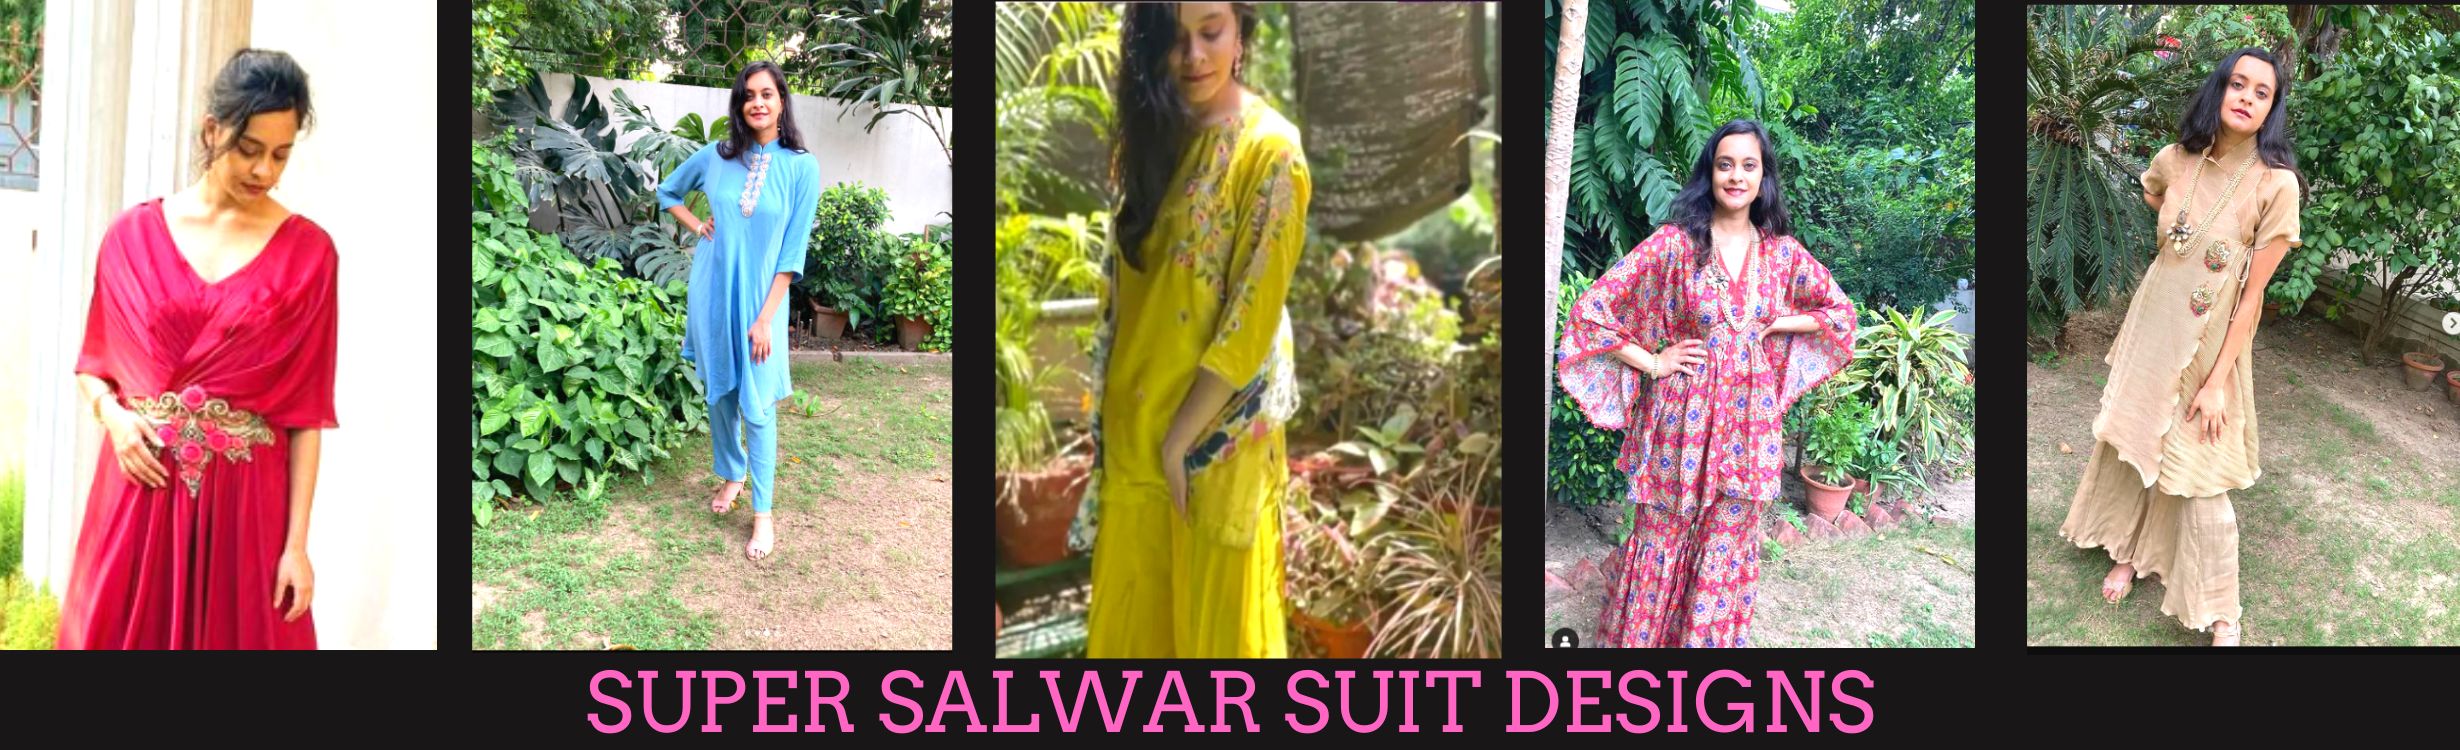 Salwar suits Designs